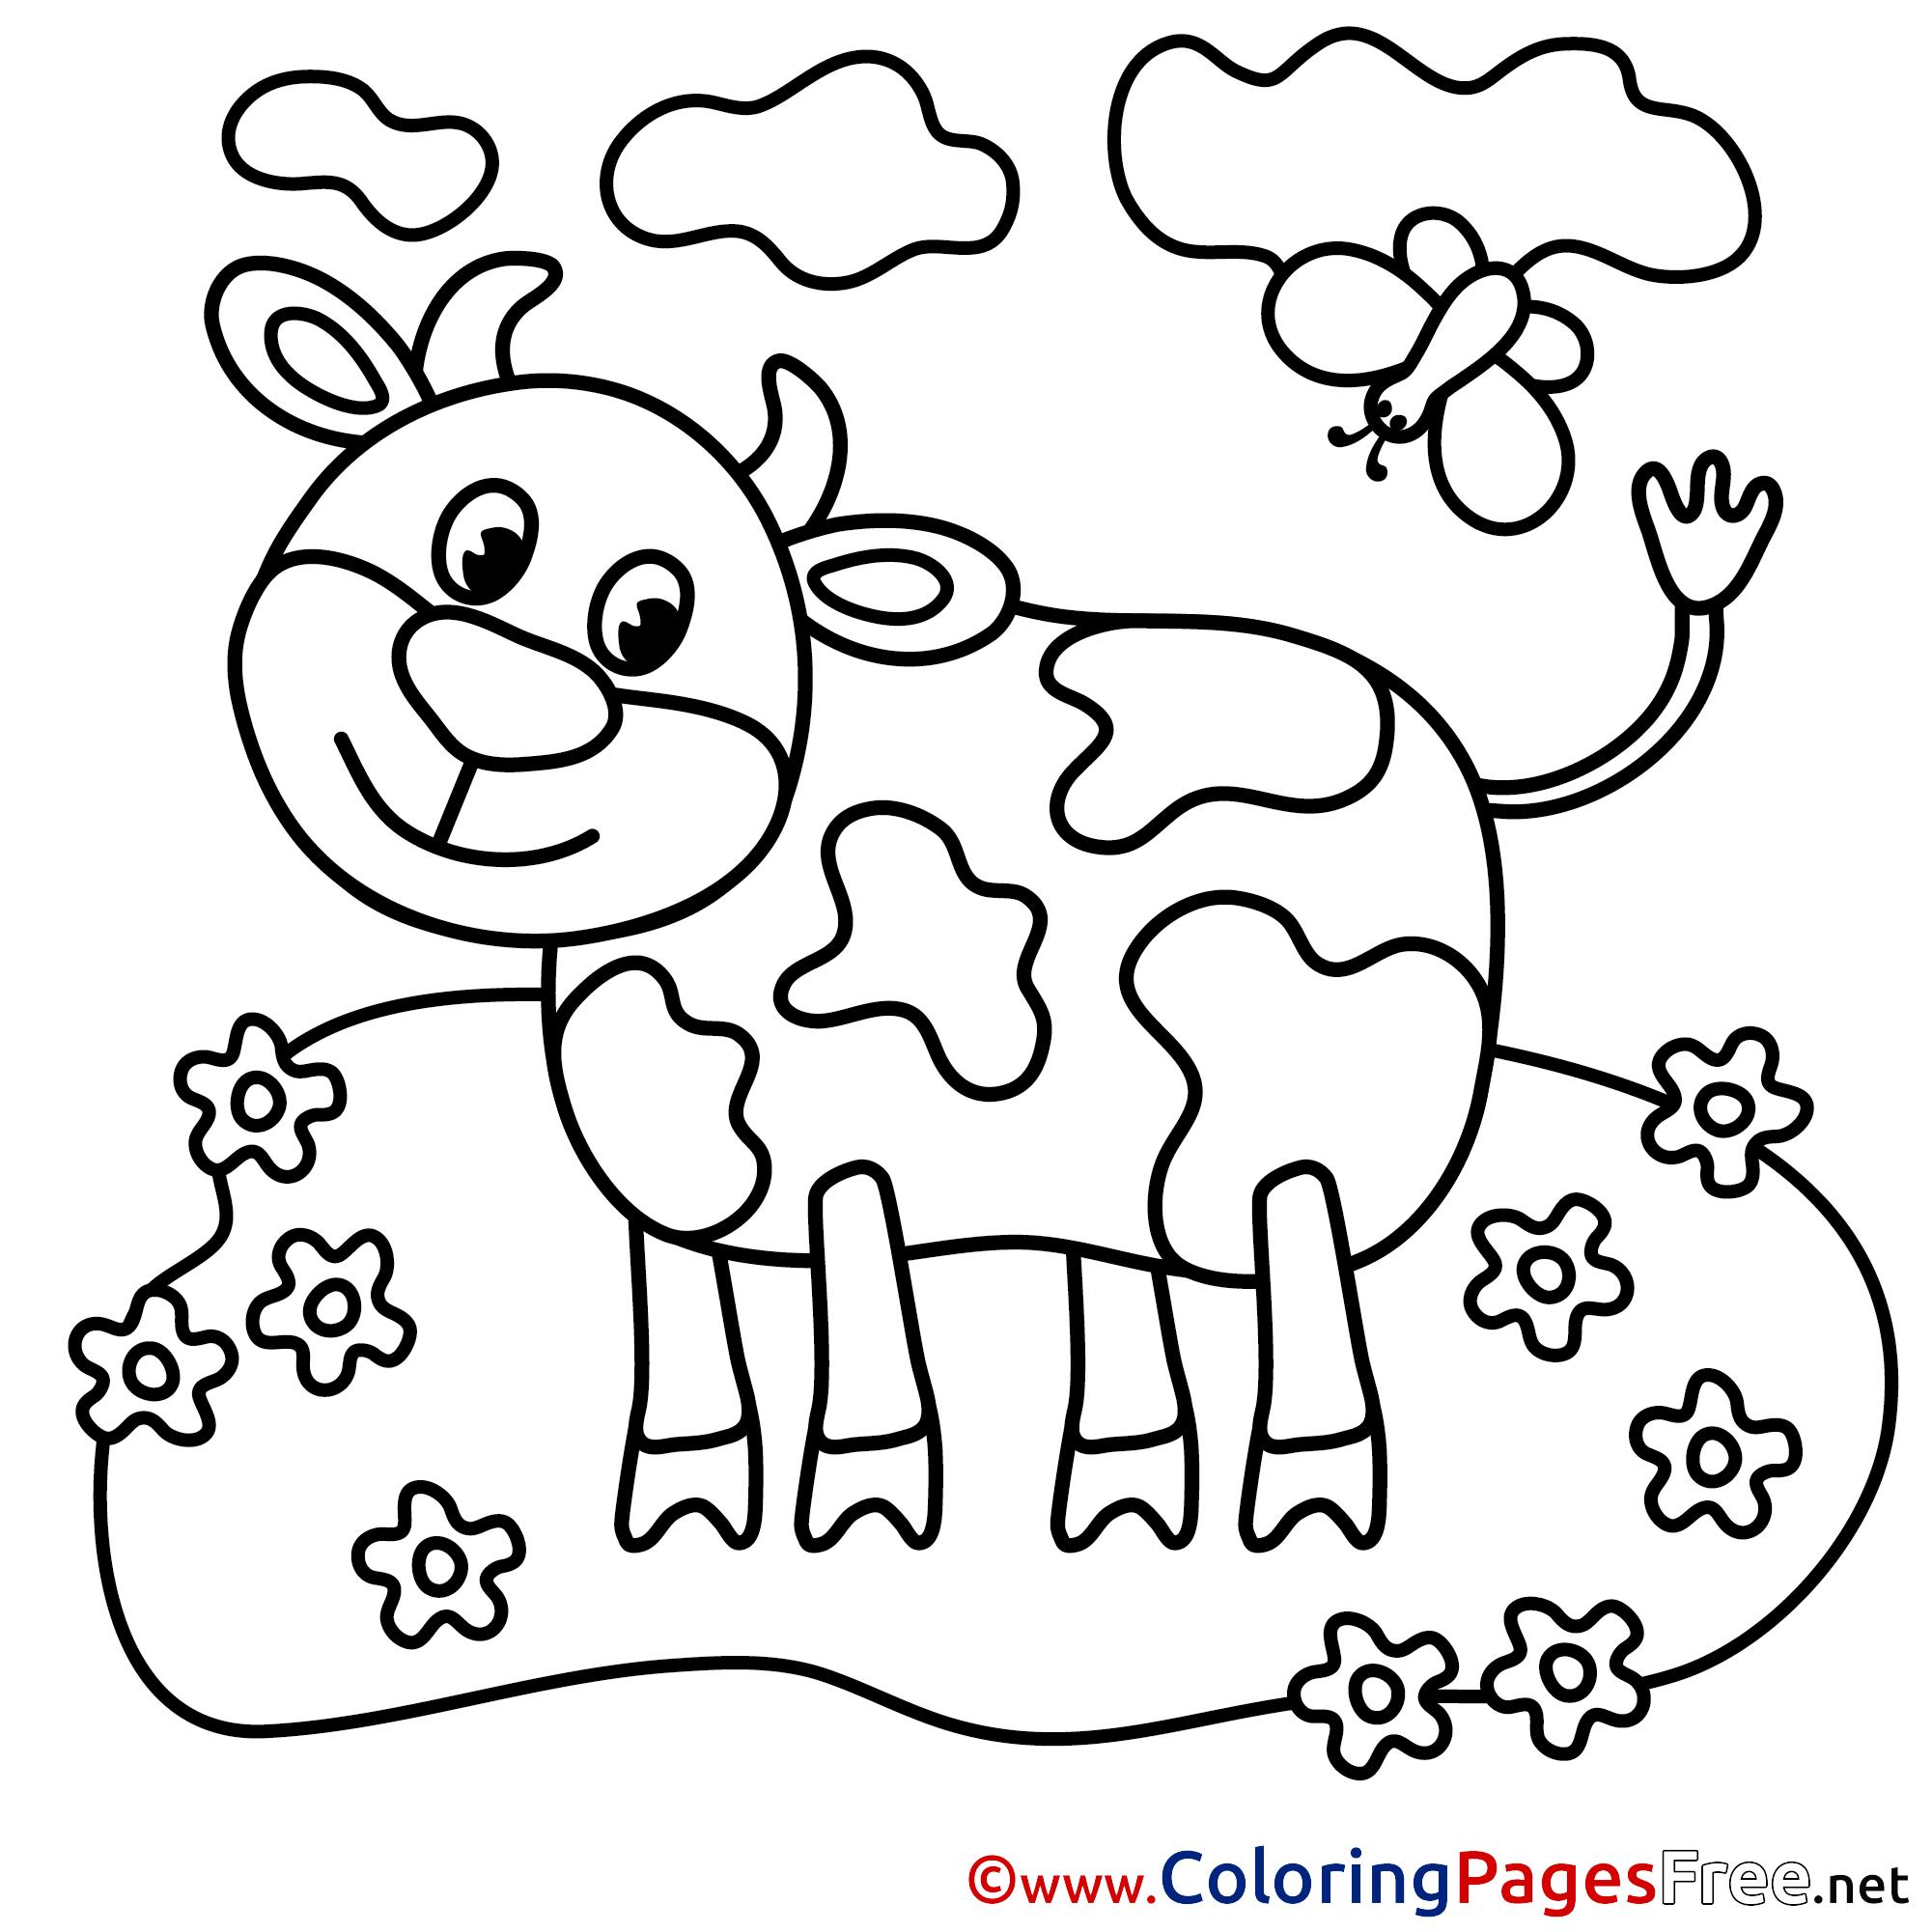 Calf Coloring Sheets download free